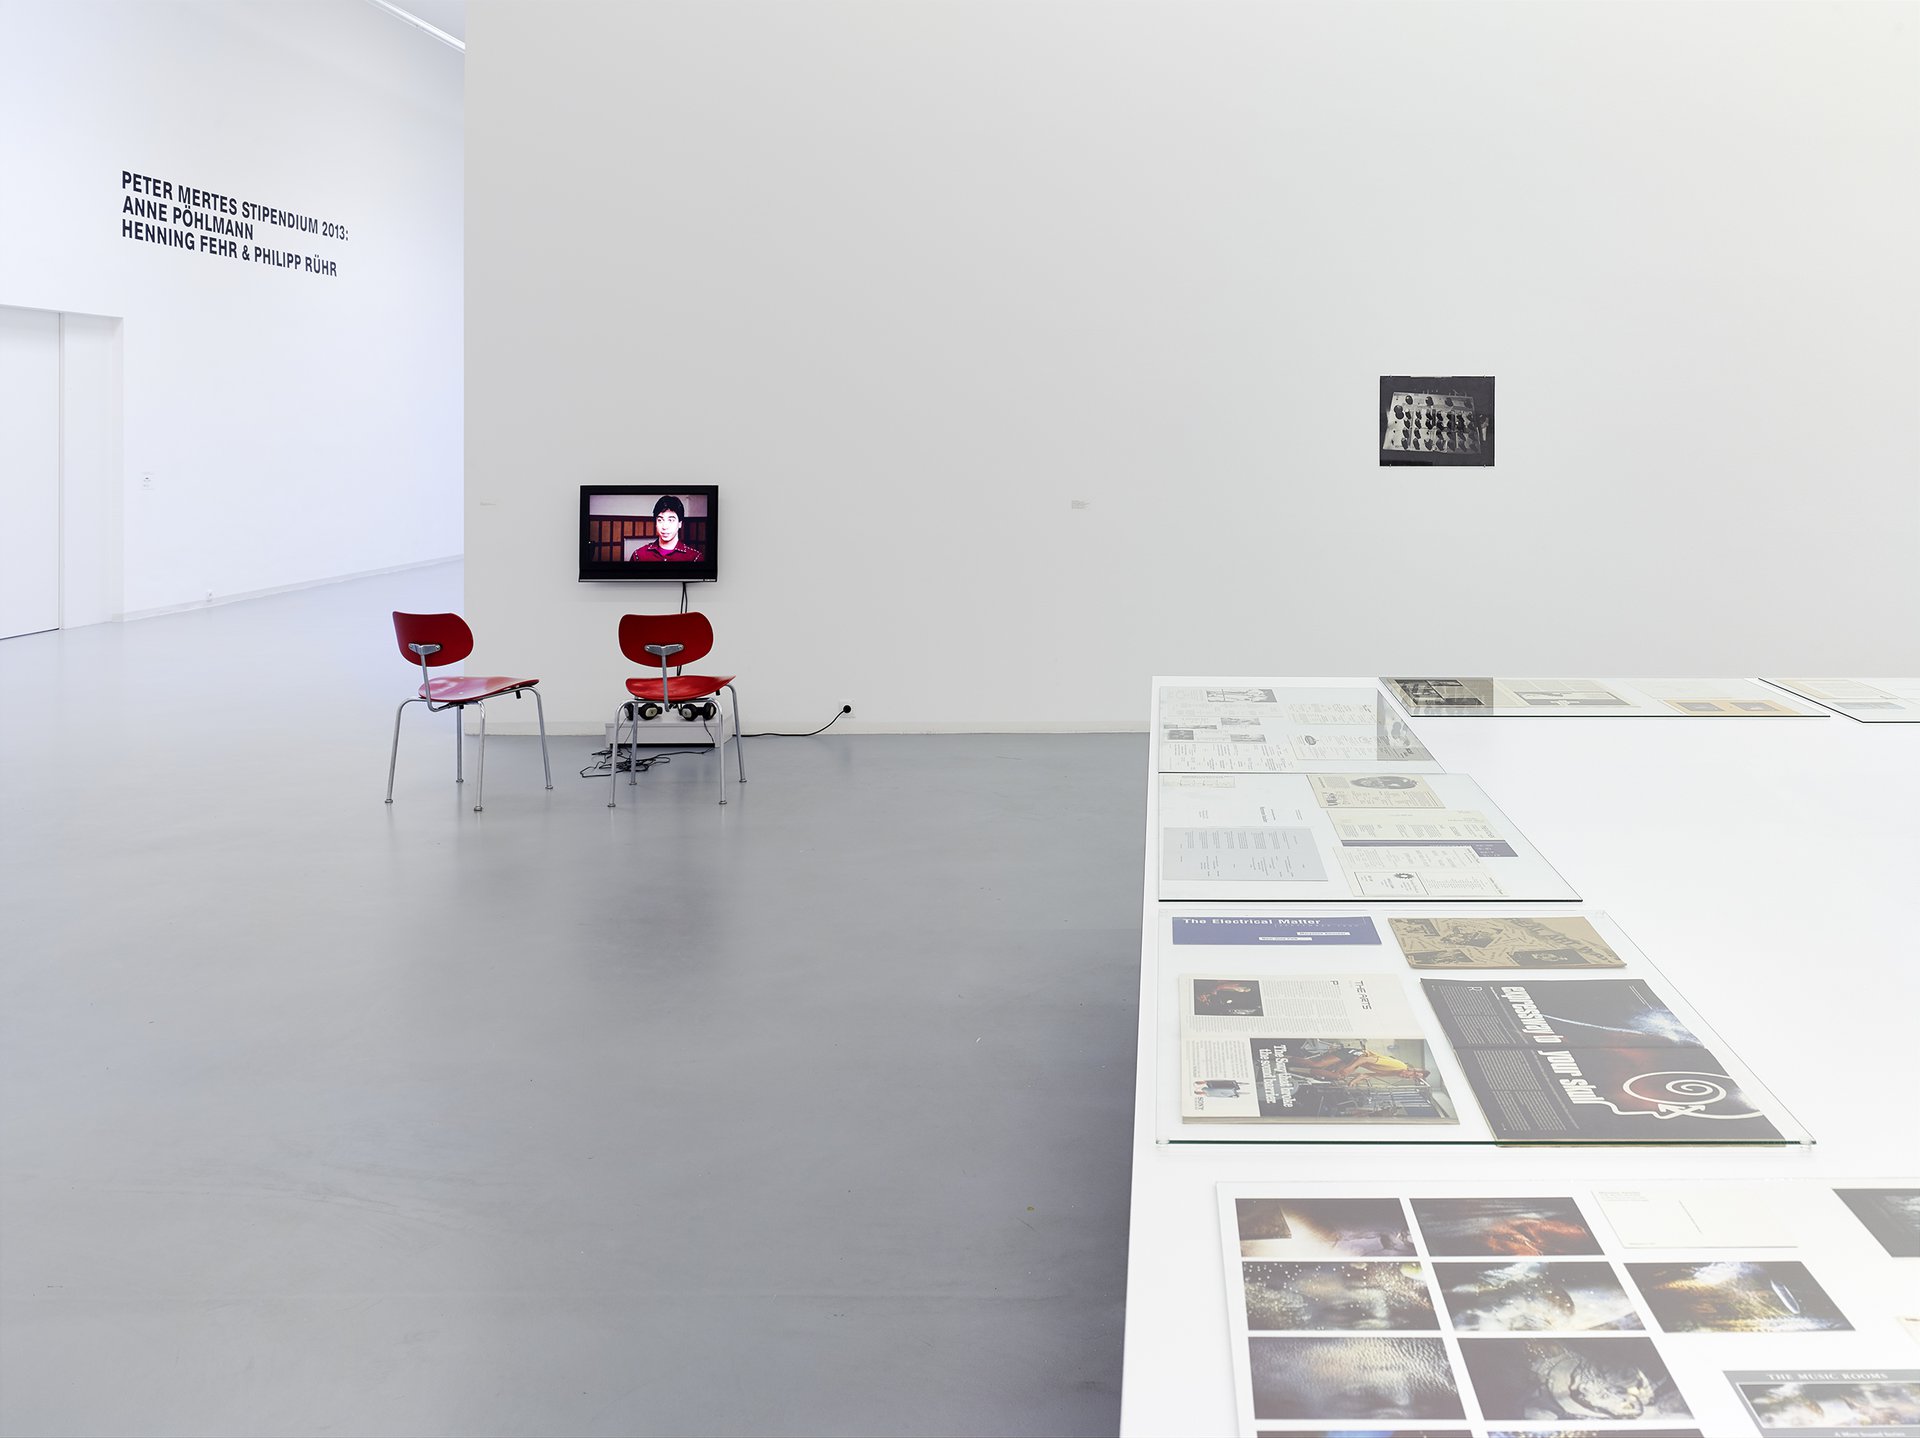 Maryanne Amacher, installation view, 2014, Bonner Kunstverein, Courtesy the artist. Photo: Simon Vogel